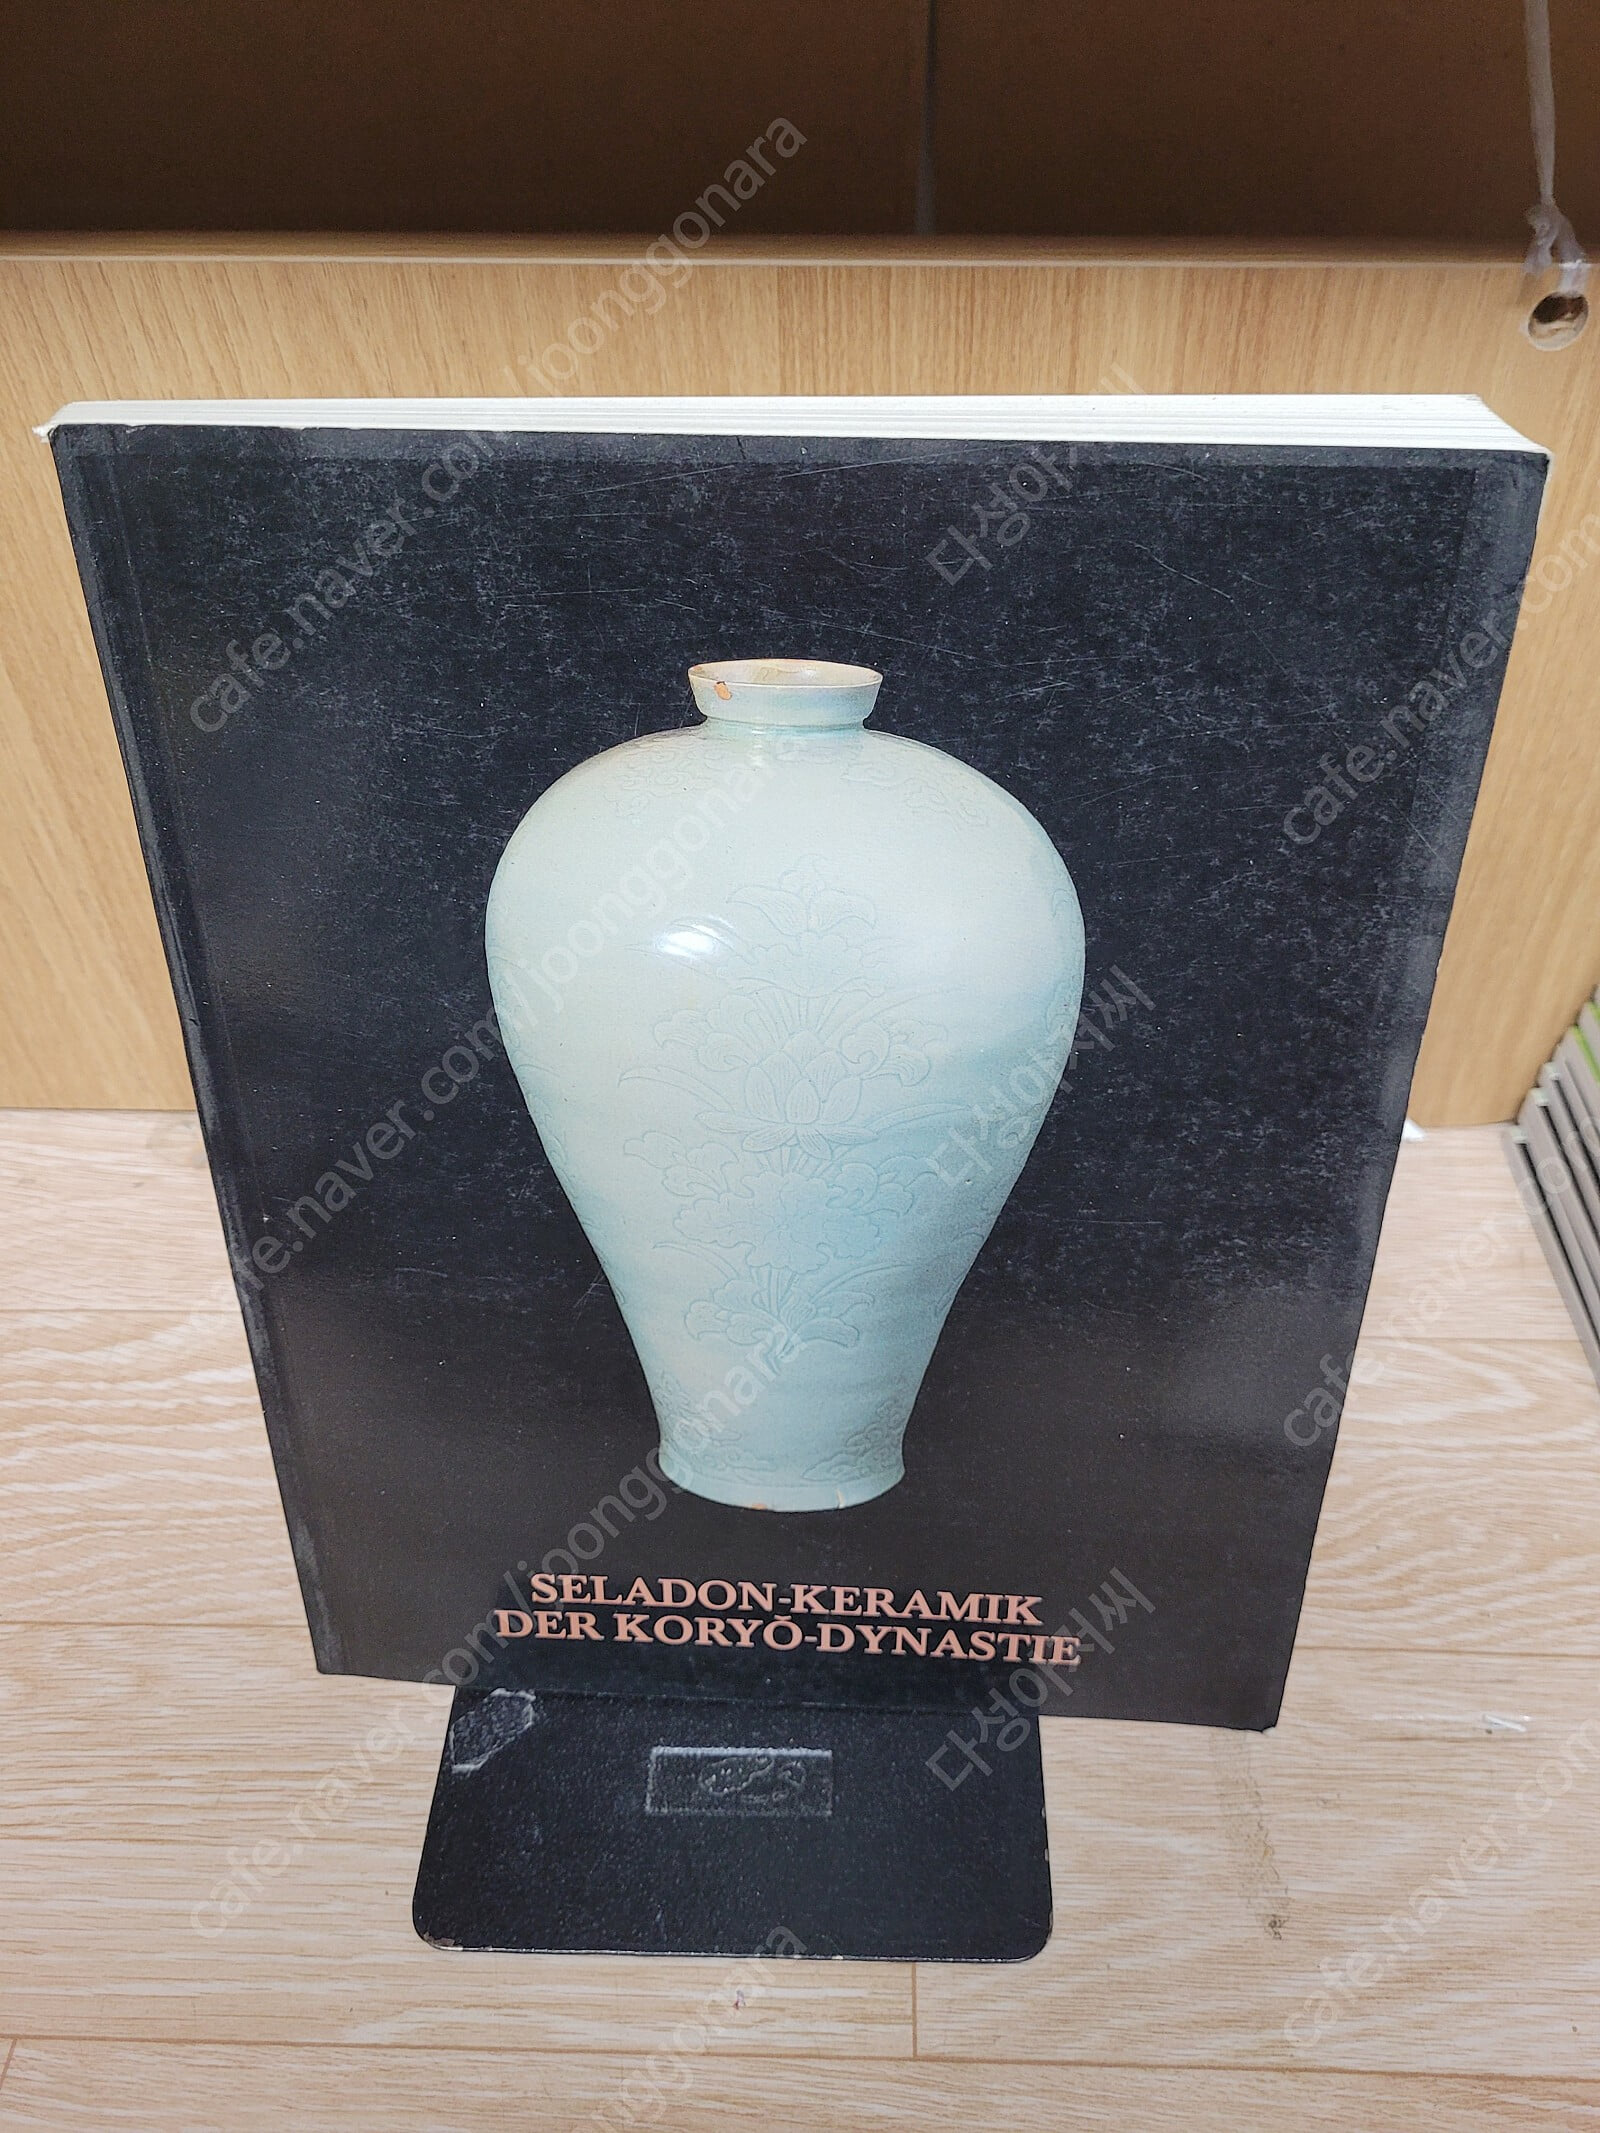 seladon keramik der korryo-dynastie (영문판/고려자기 고고학 관련 서적 1984)실사진